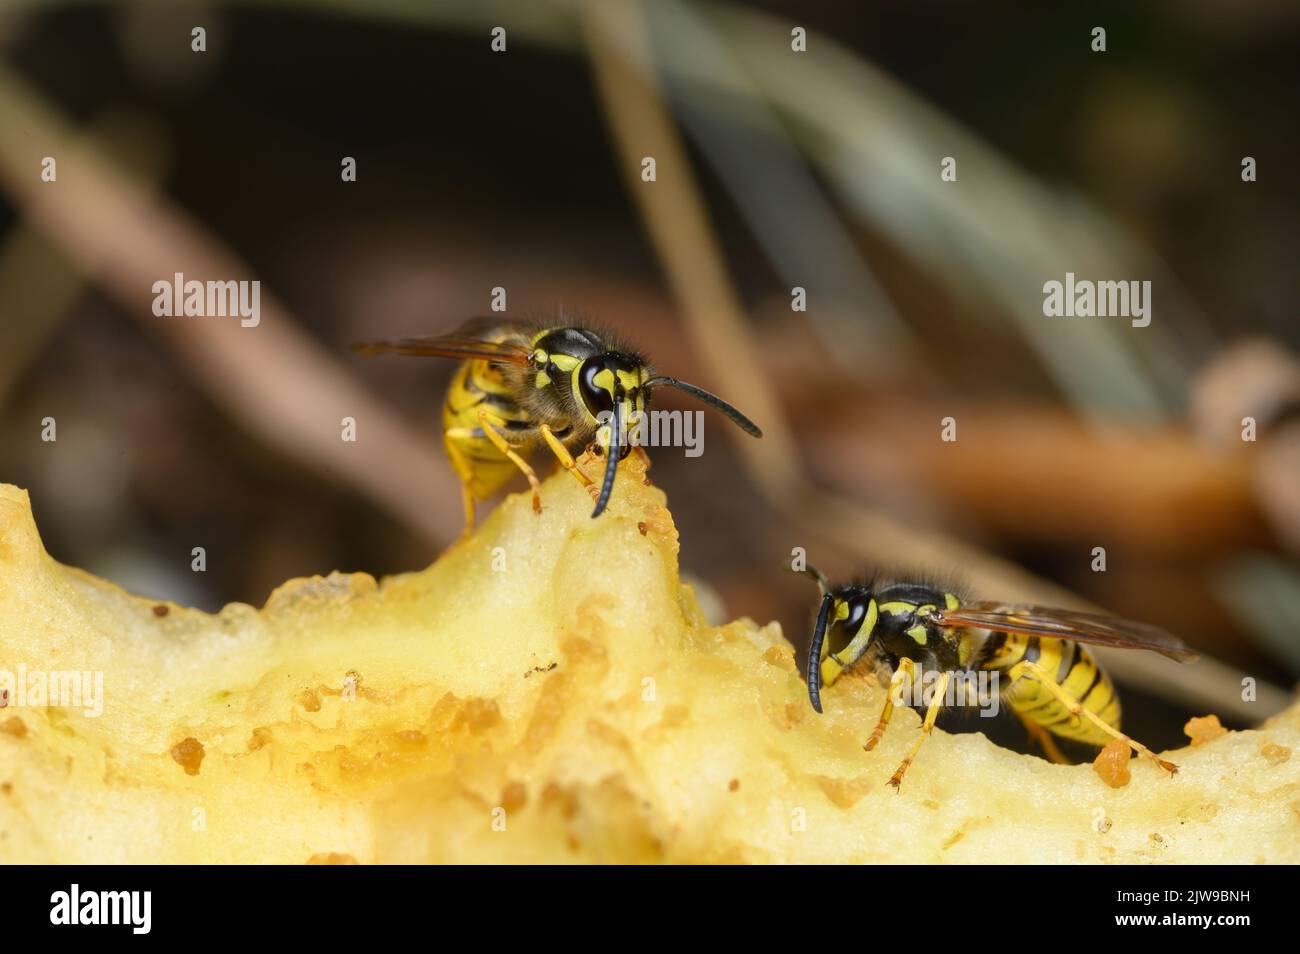 Common wasp (Vespula vulgaris) on apple core. Stock Photo